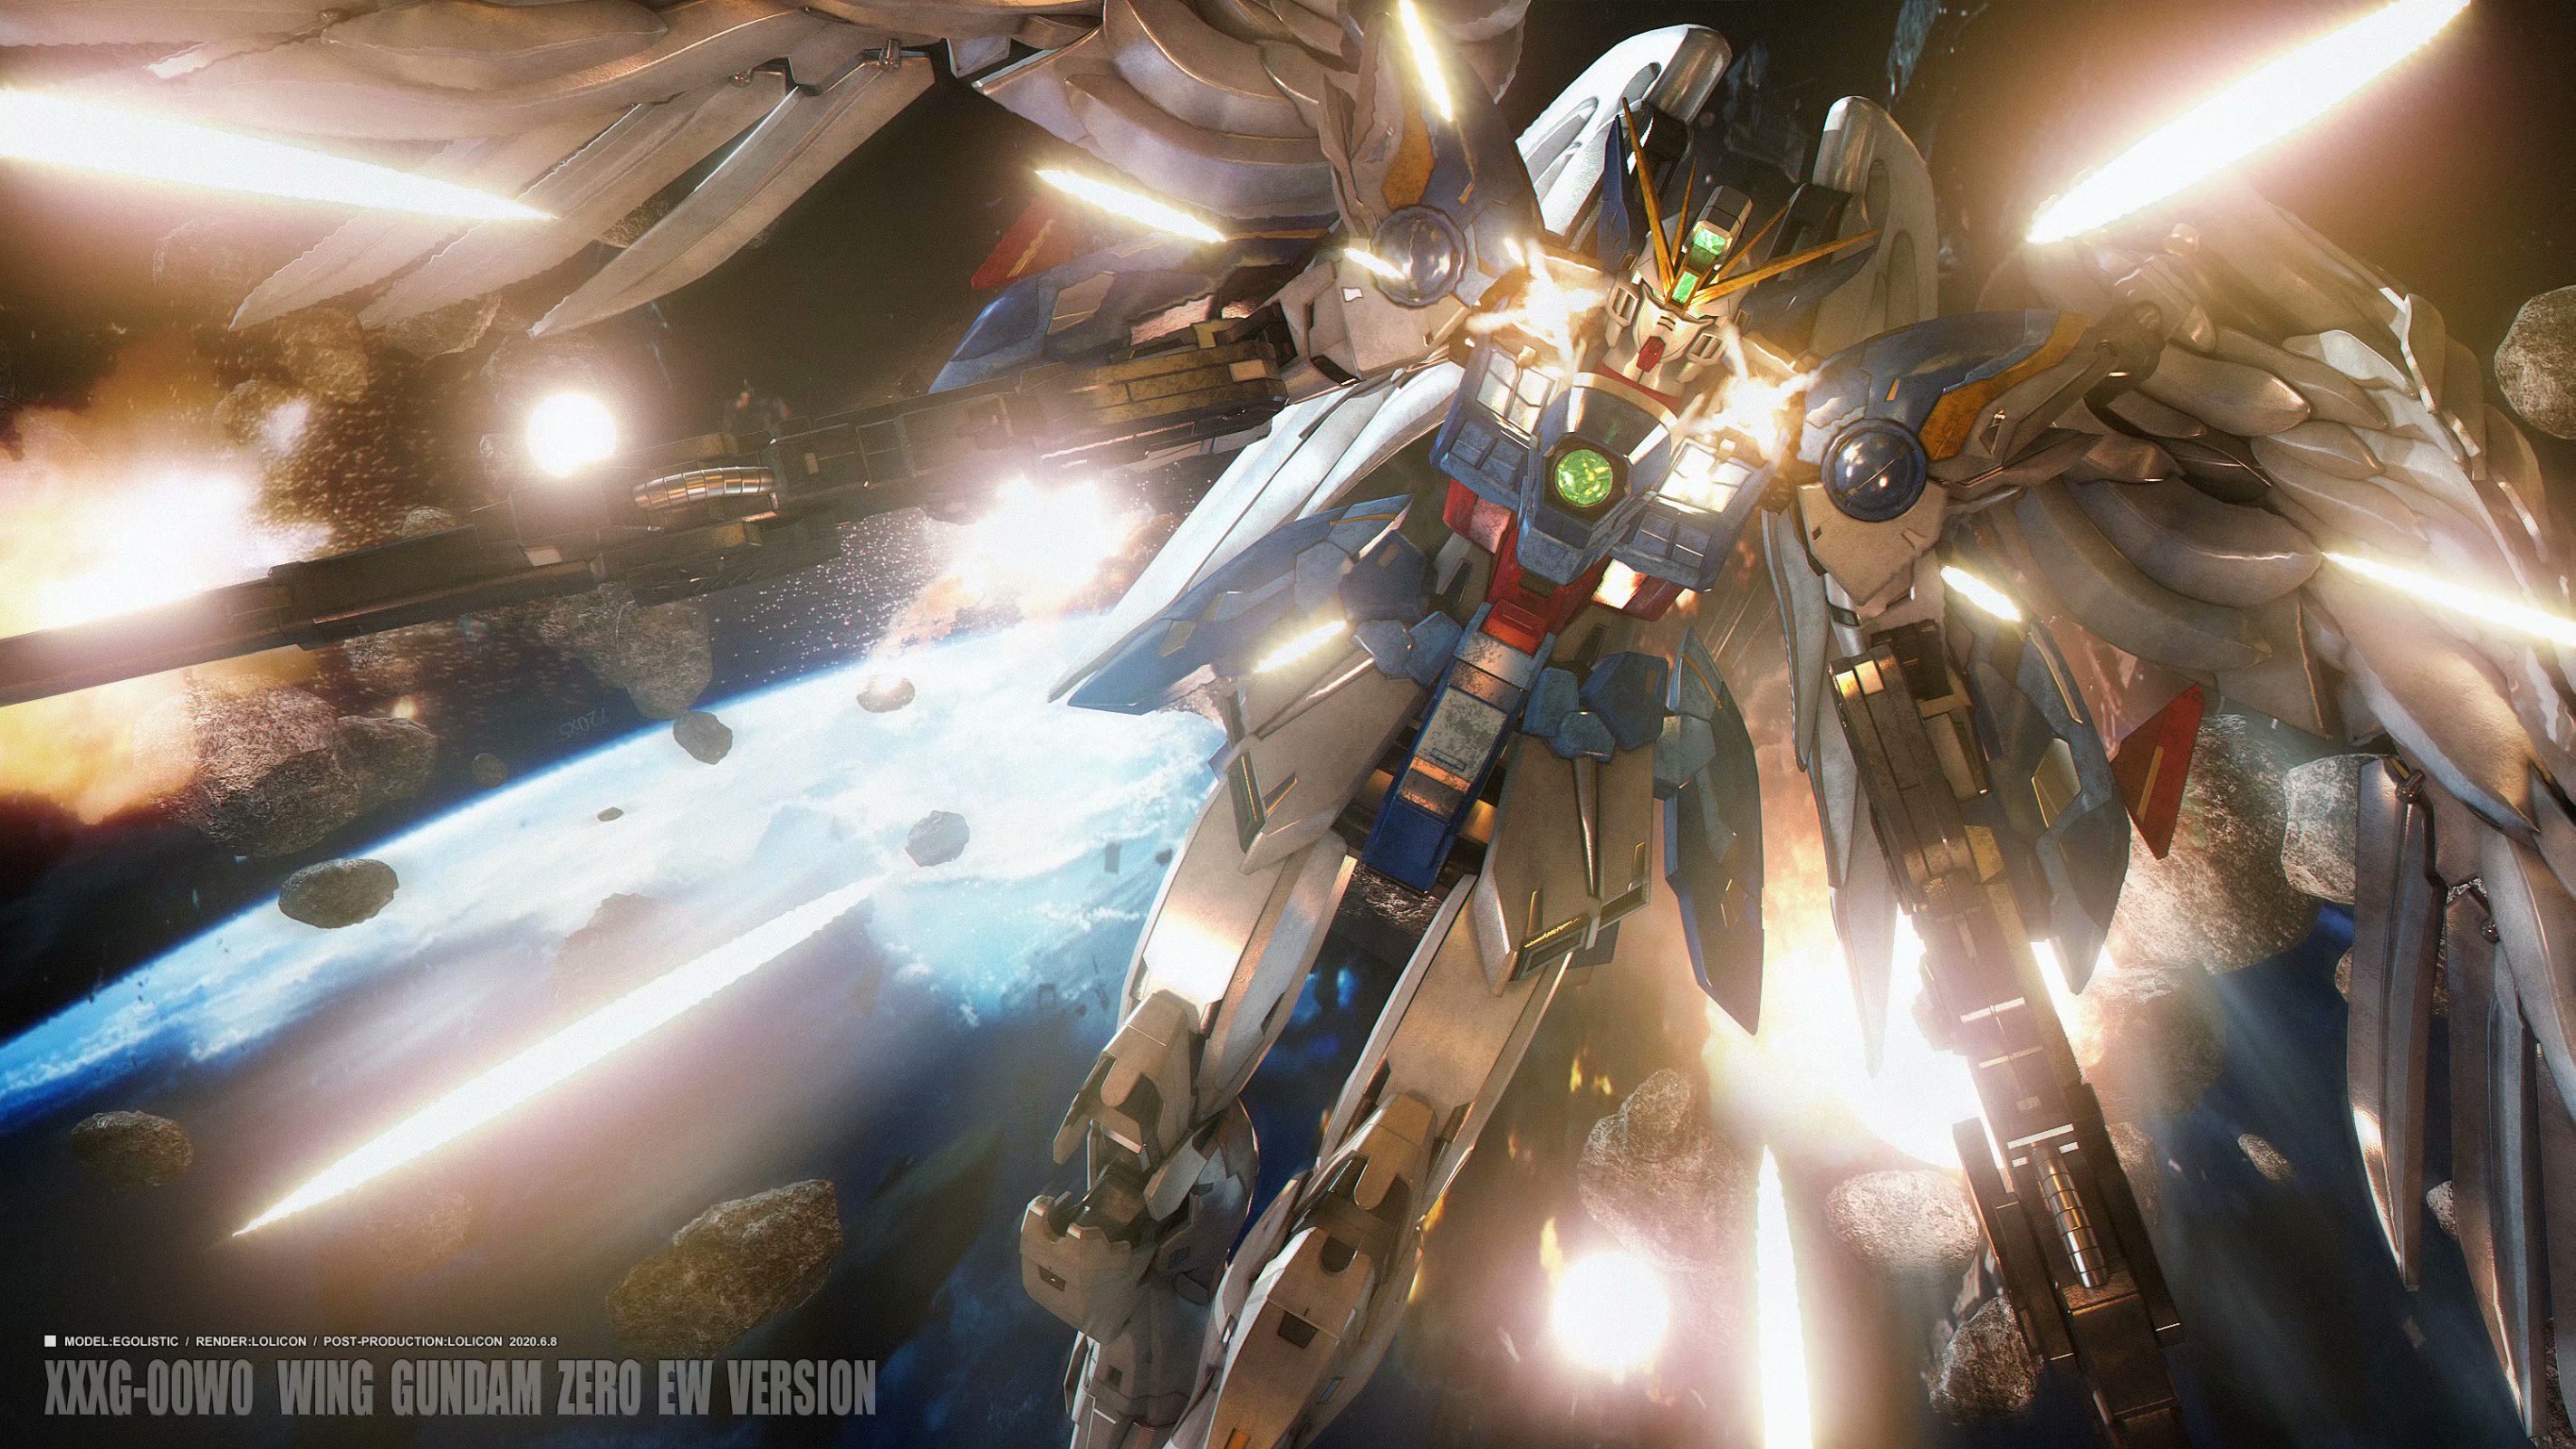 Anime Mechs Gundam Super Robot Wars Mobile Suit Gundam Wing Wing Gundam Zero Artwork Digital Art Fan 2844x1600